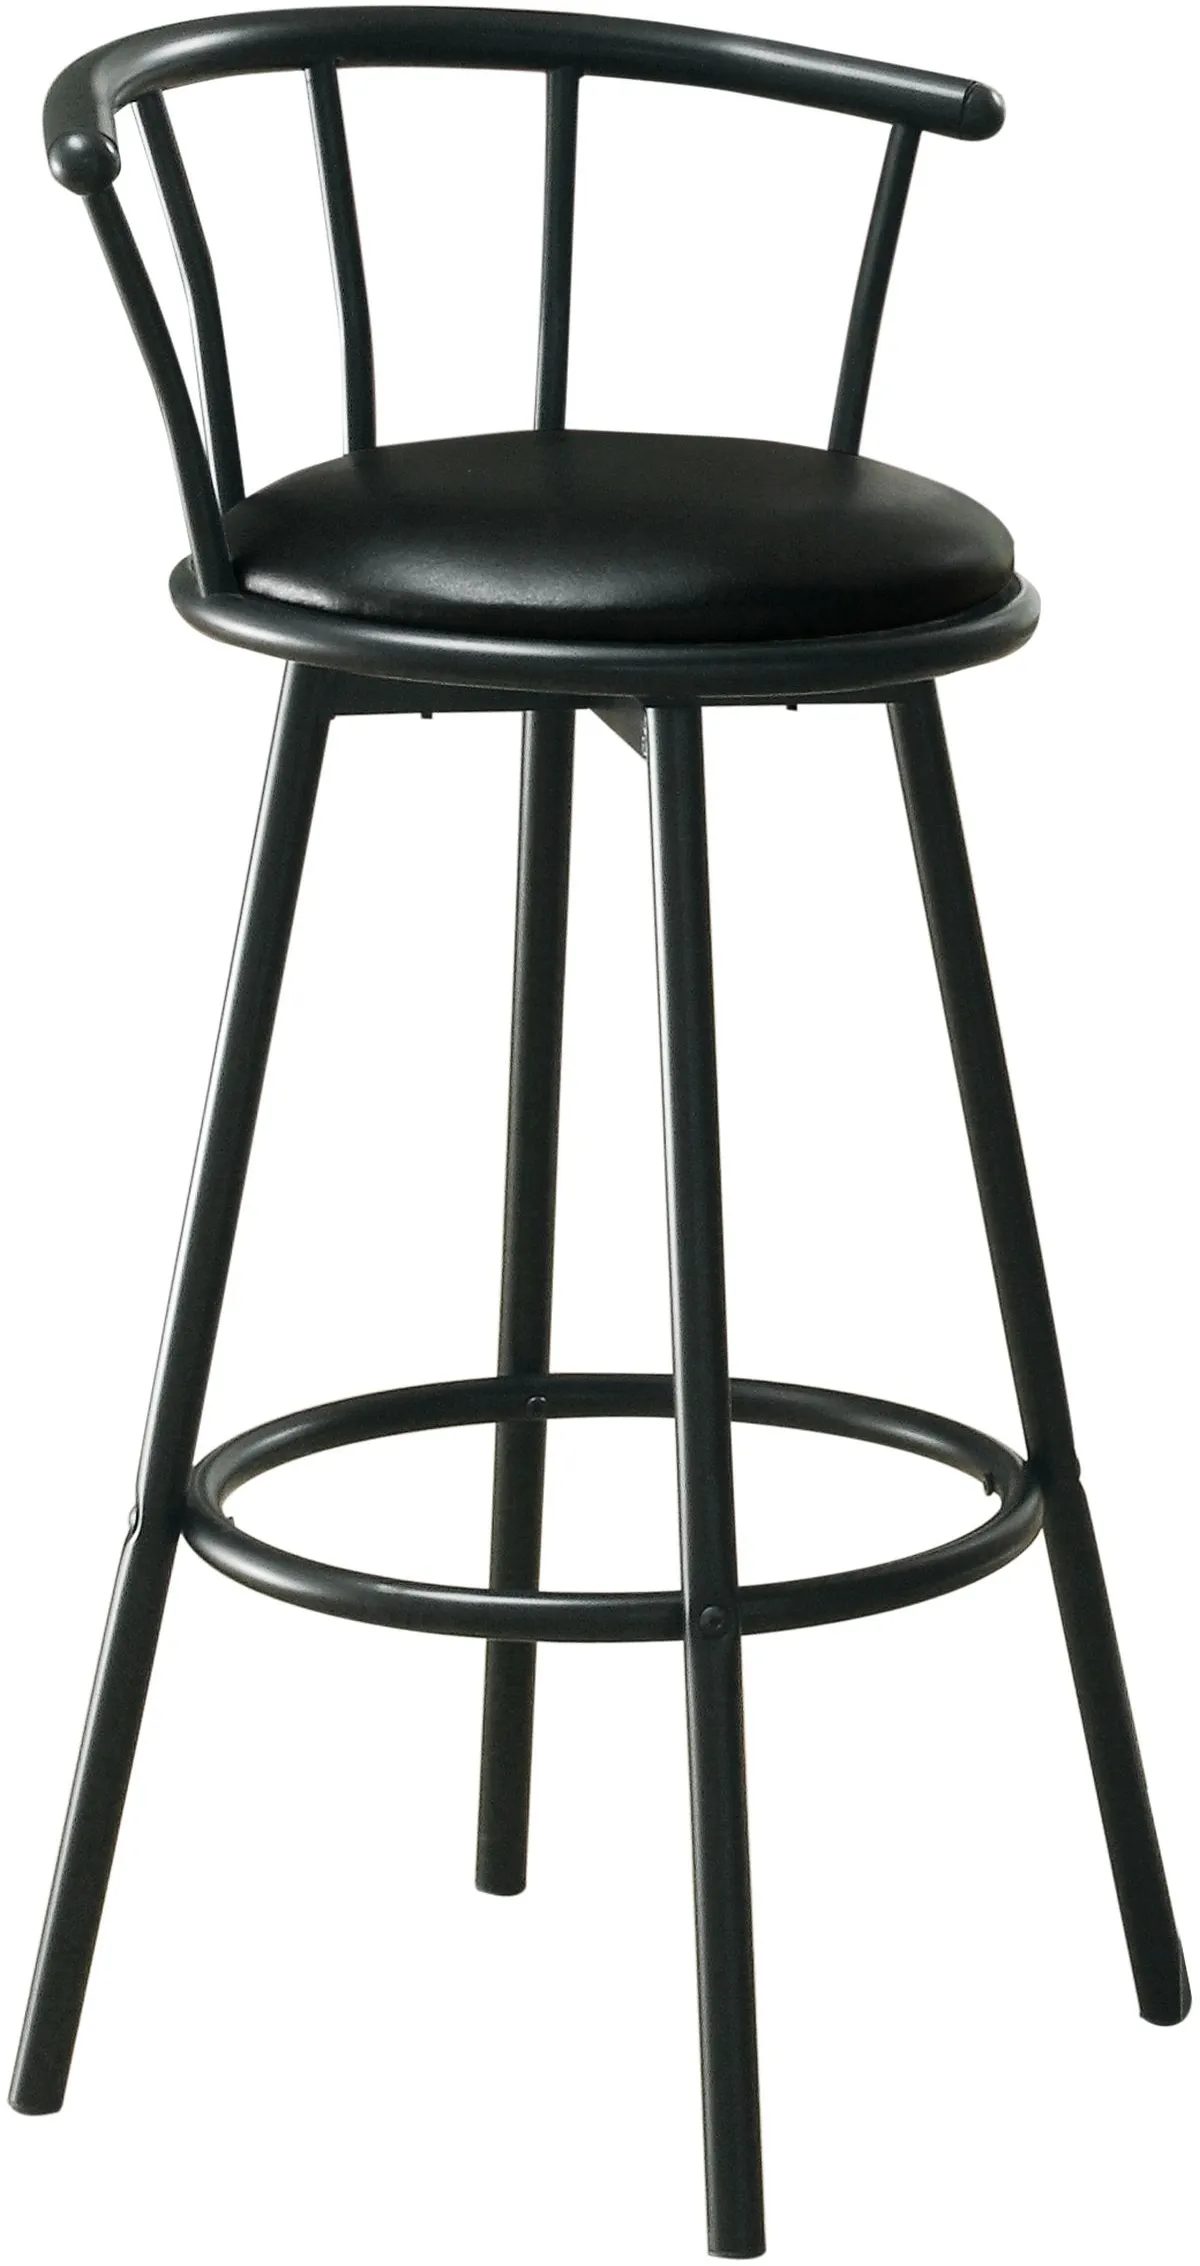 Bar Stool, Set Of 2, Swivel, Bar Height, Wood, Pu Leather Look, Black, Contemporary, Modern